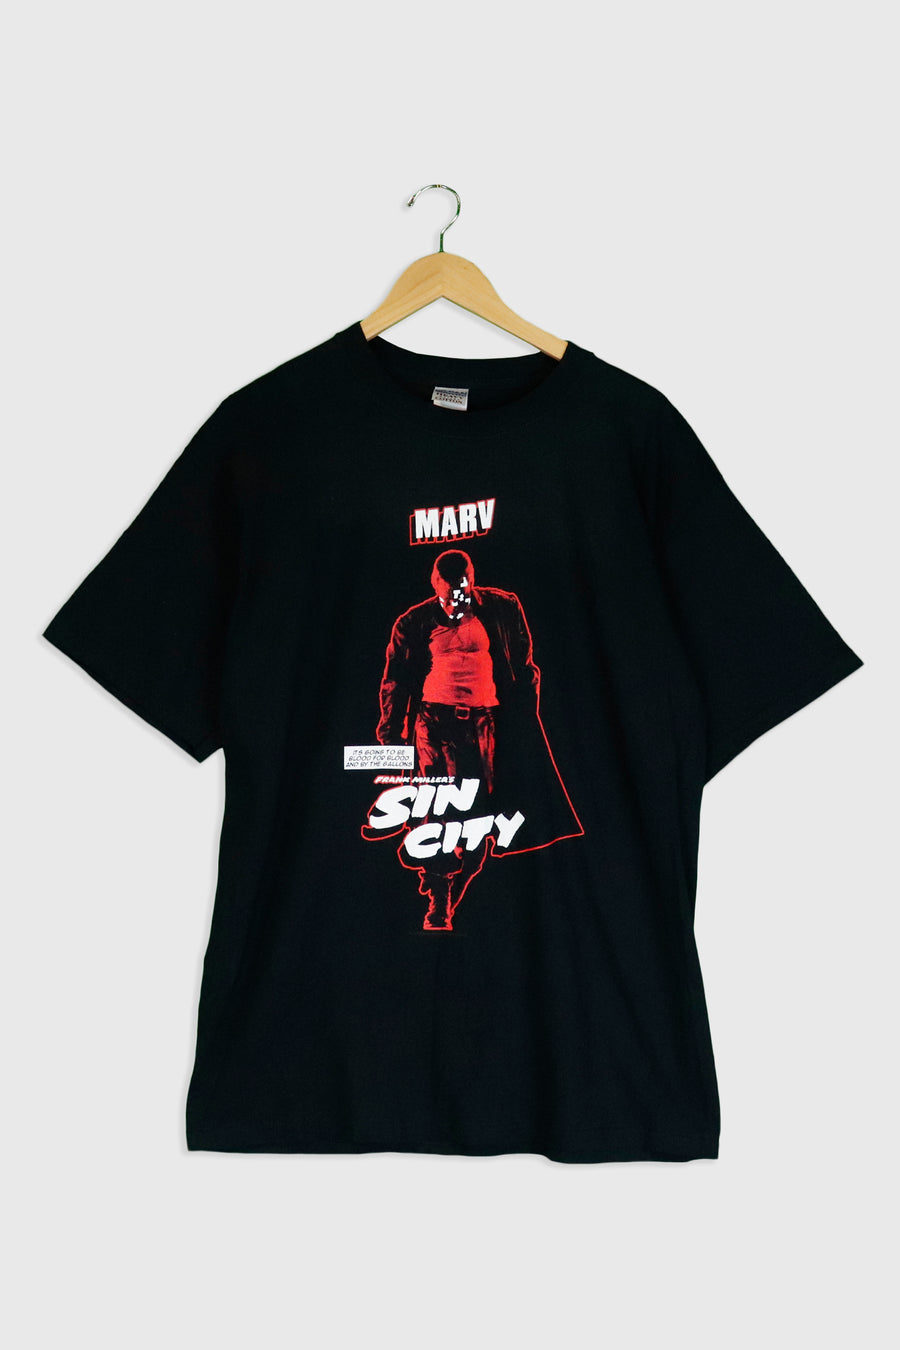 Vintage 2005 Sin City Marv T Shirt Sz L